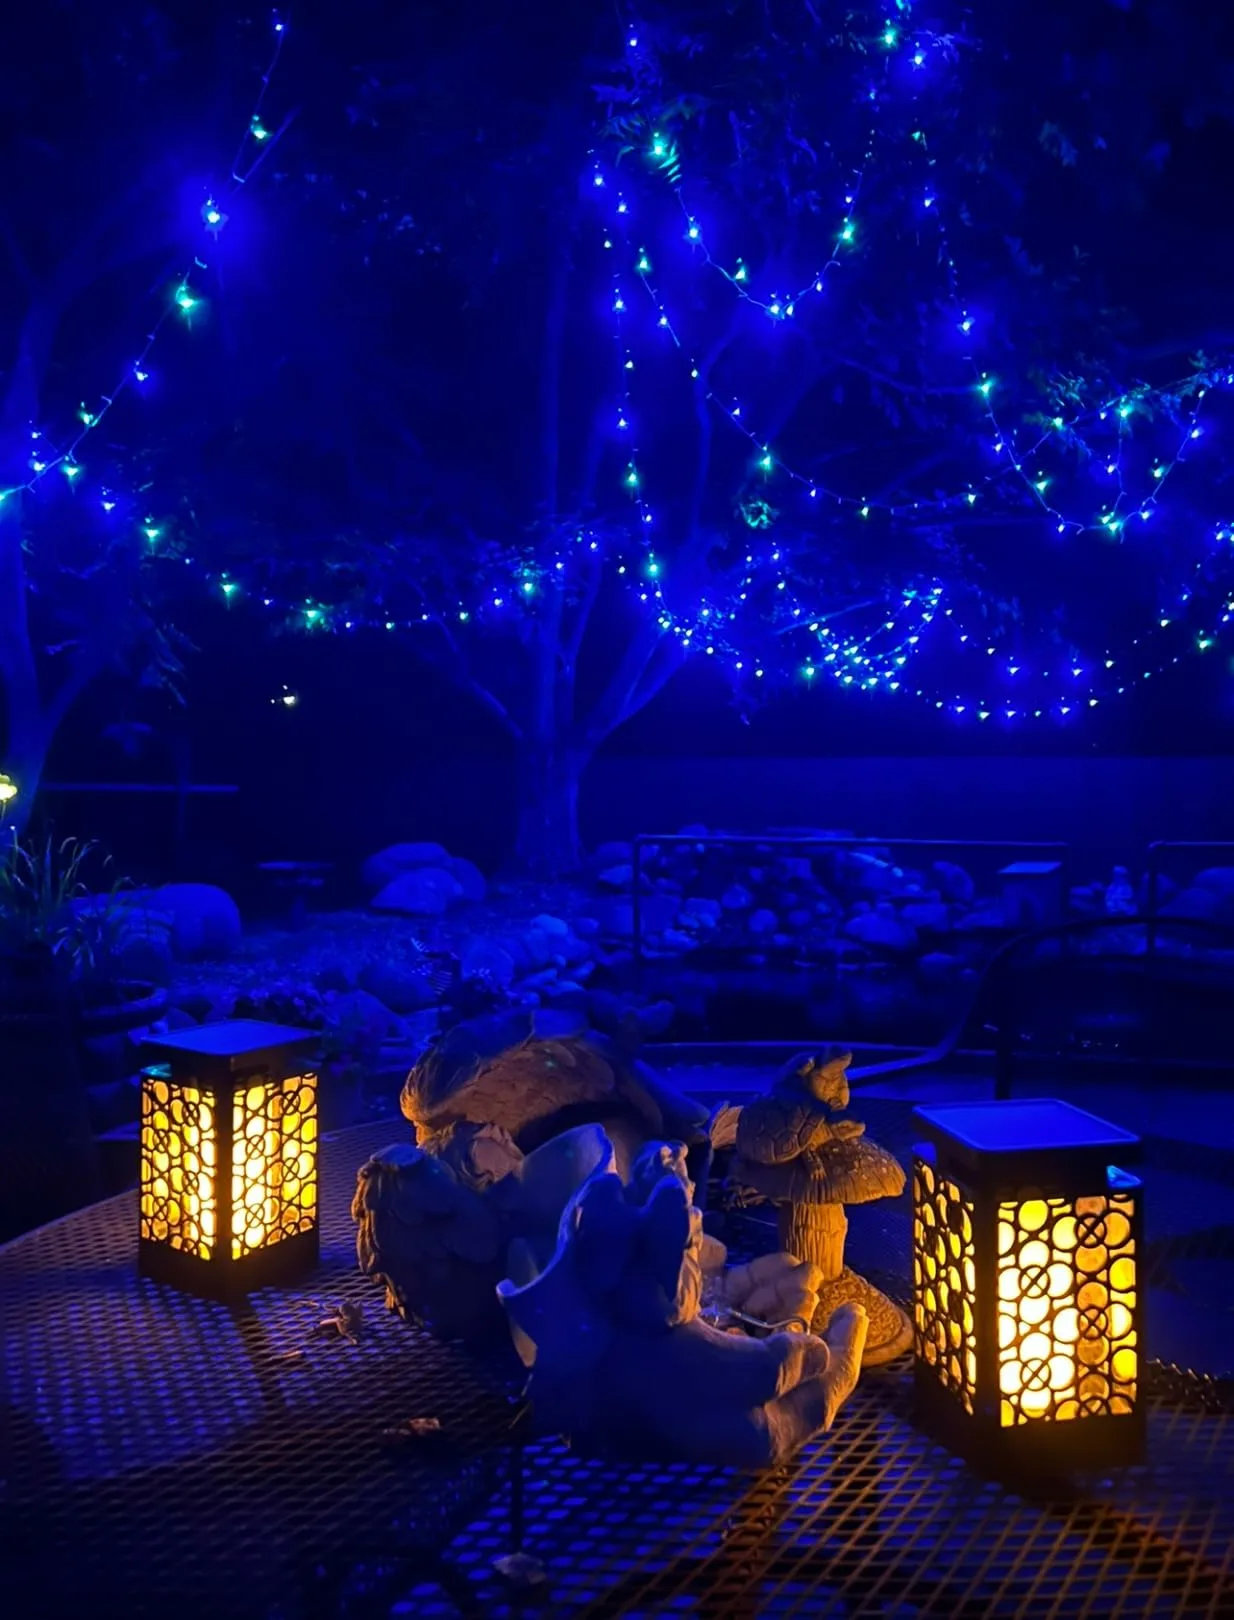 Blue Stringlights Warm Lamp Metal Table Hanging Tree Bottom Angle View Outdoor Lights For Christmas